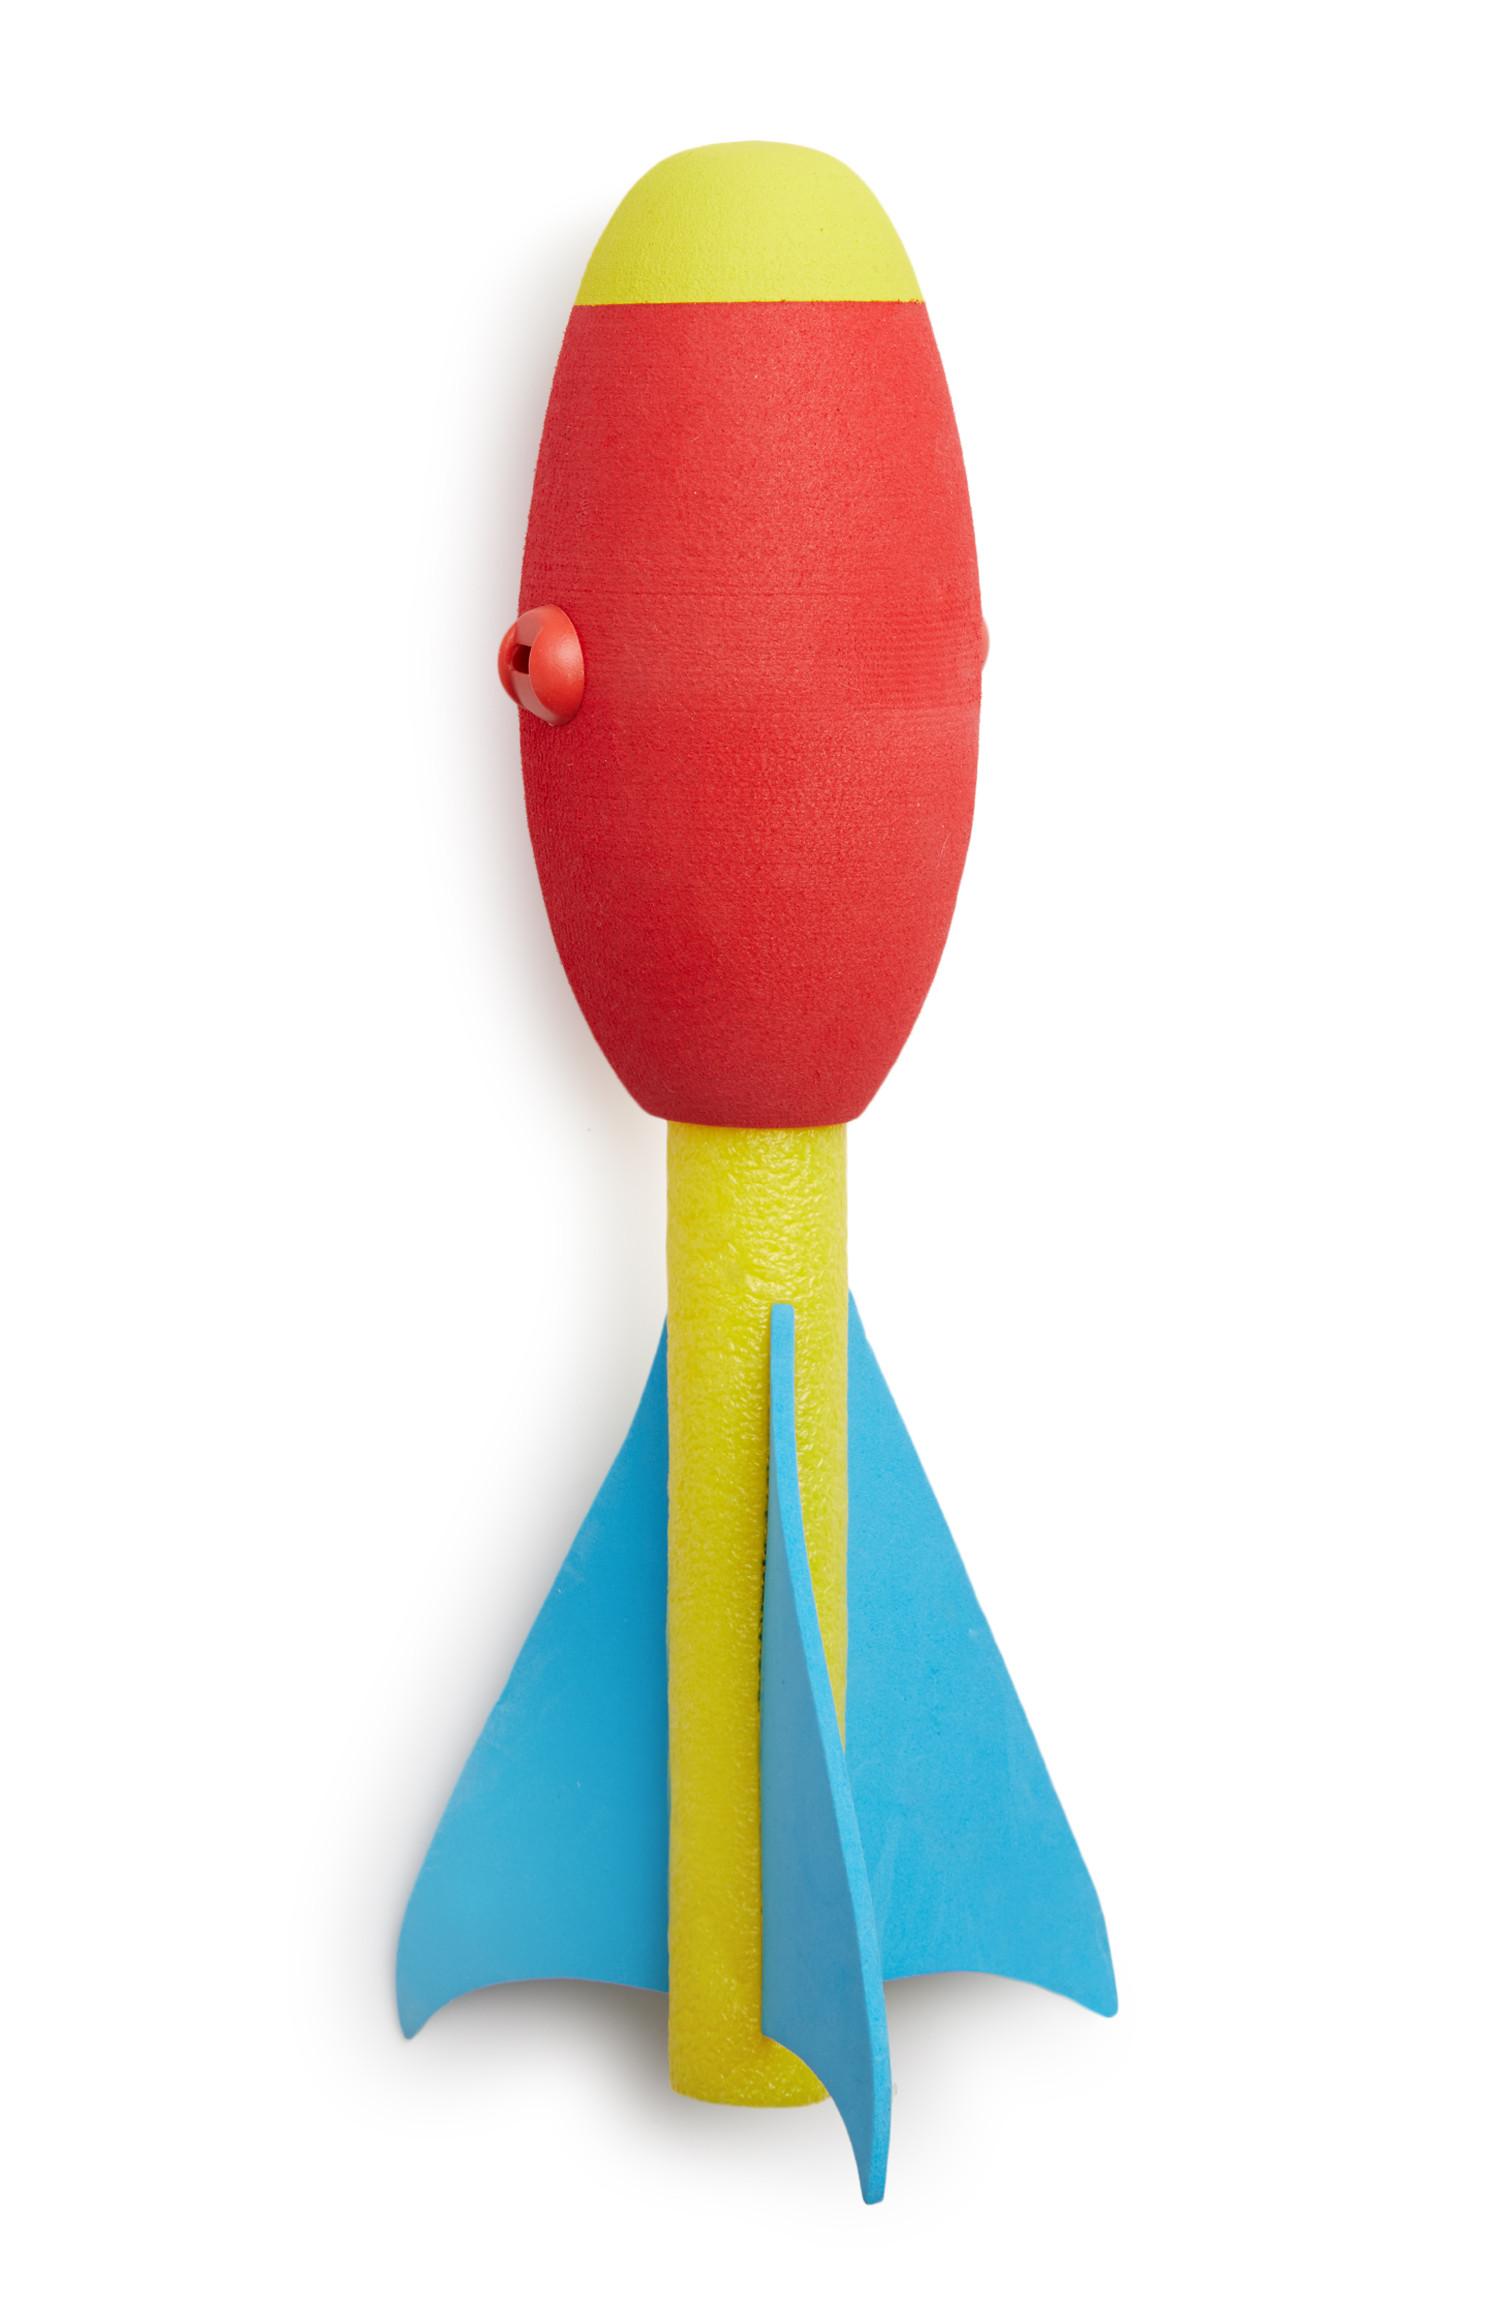 whistle rocket toy